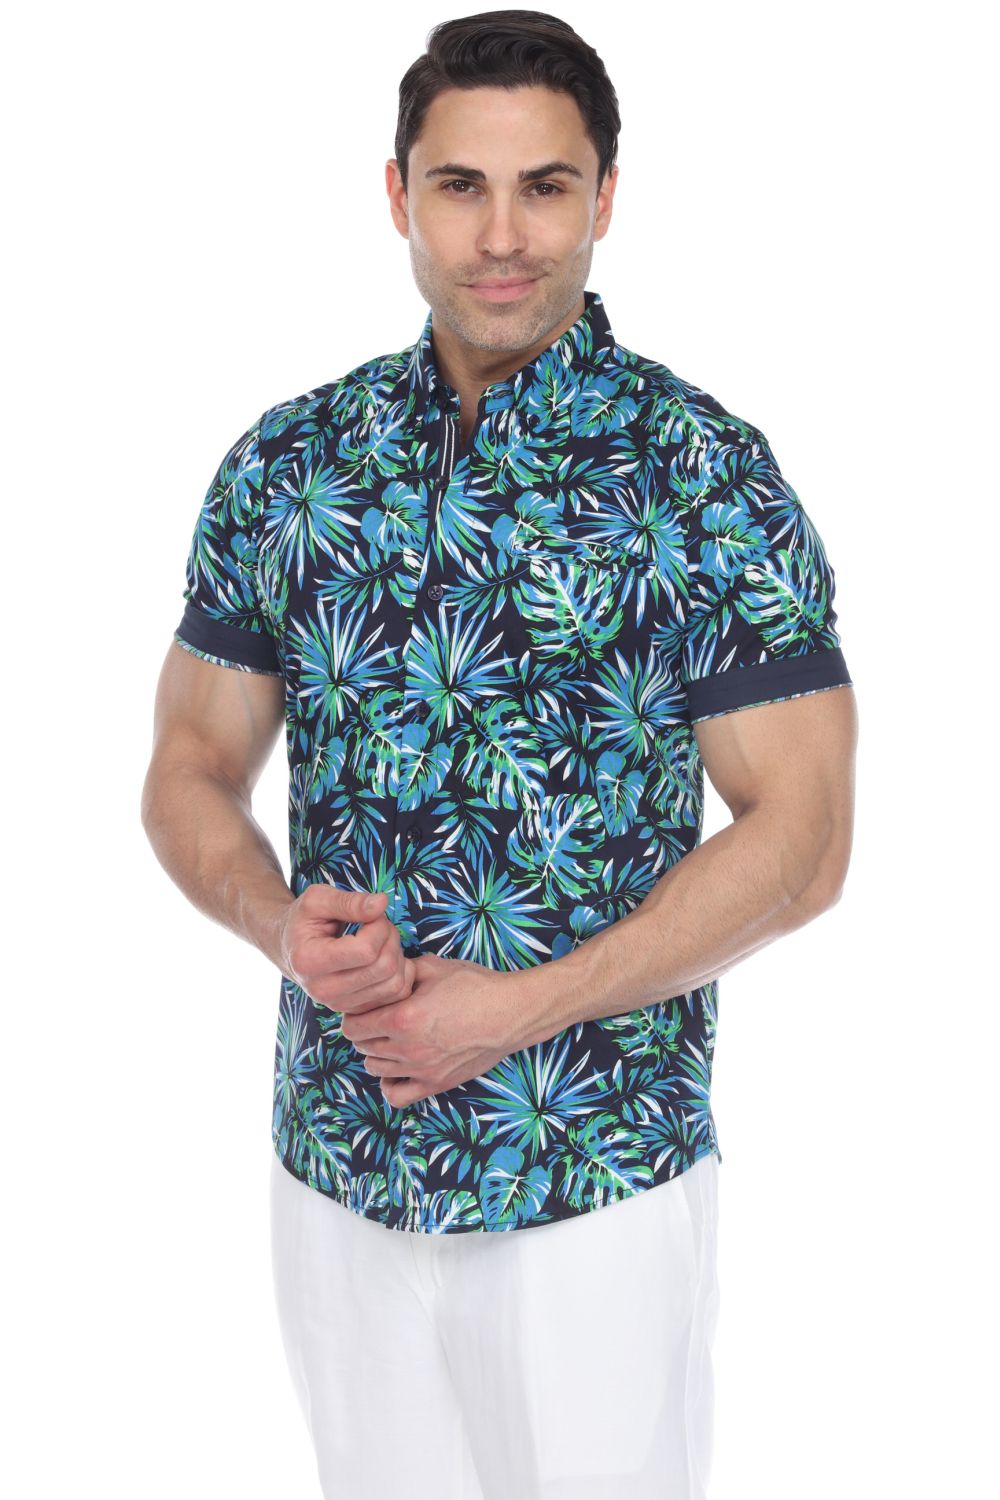 Tropical Design Shirt for Men,Short Sleeve,